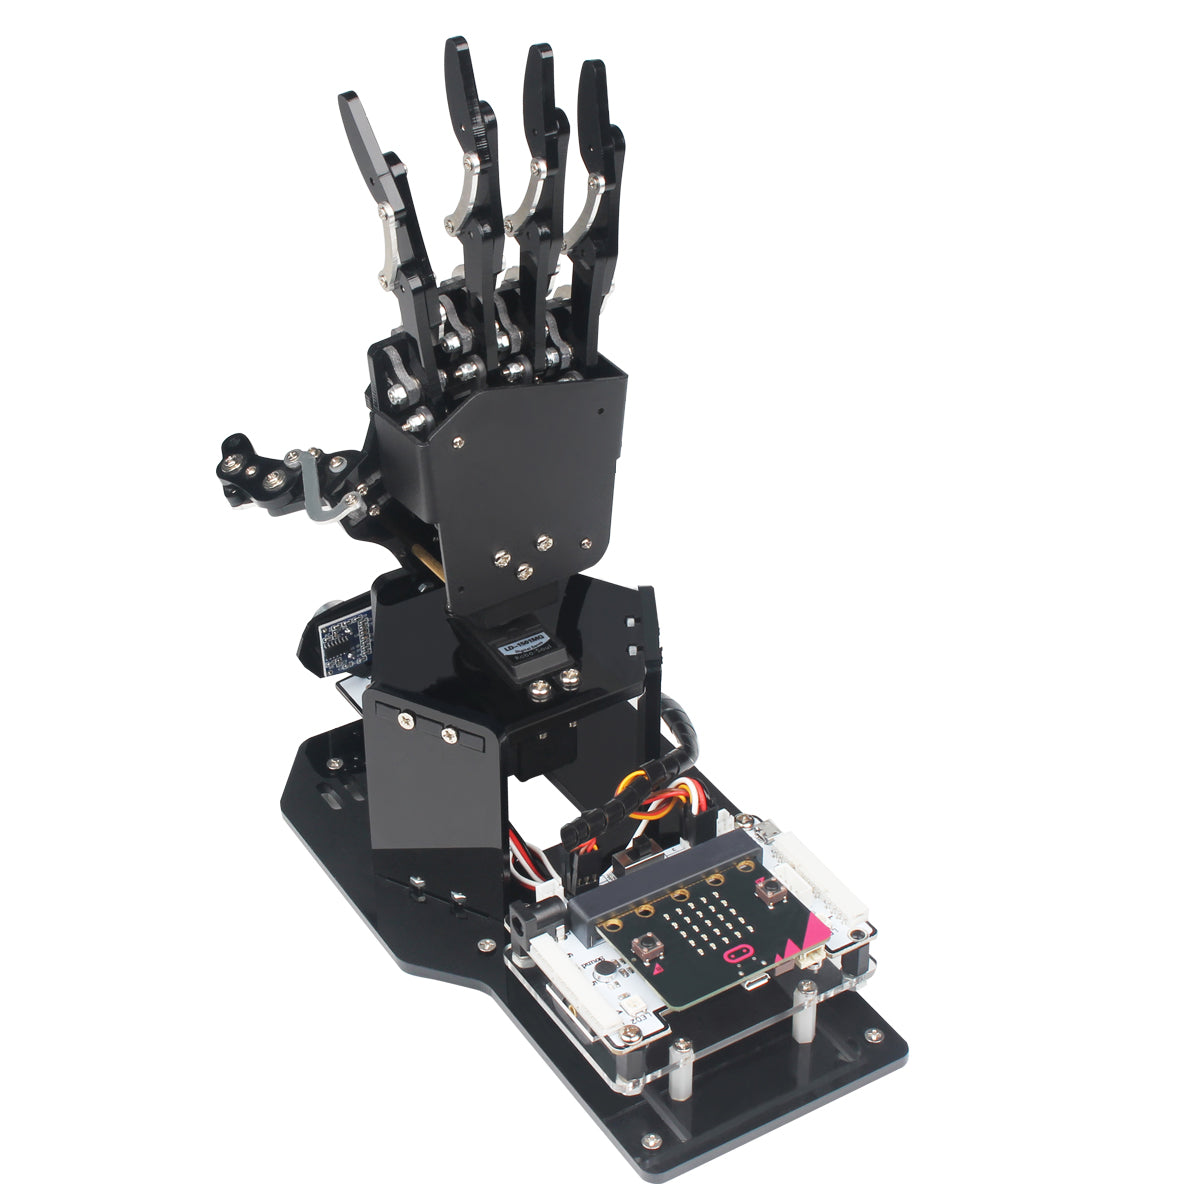 uHandbit: Hiwonder micro:bit Programmable Robotic Hand for AI Learning